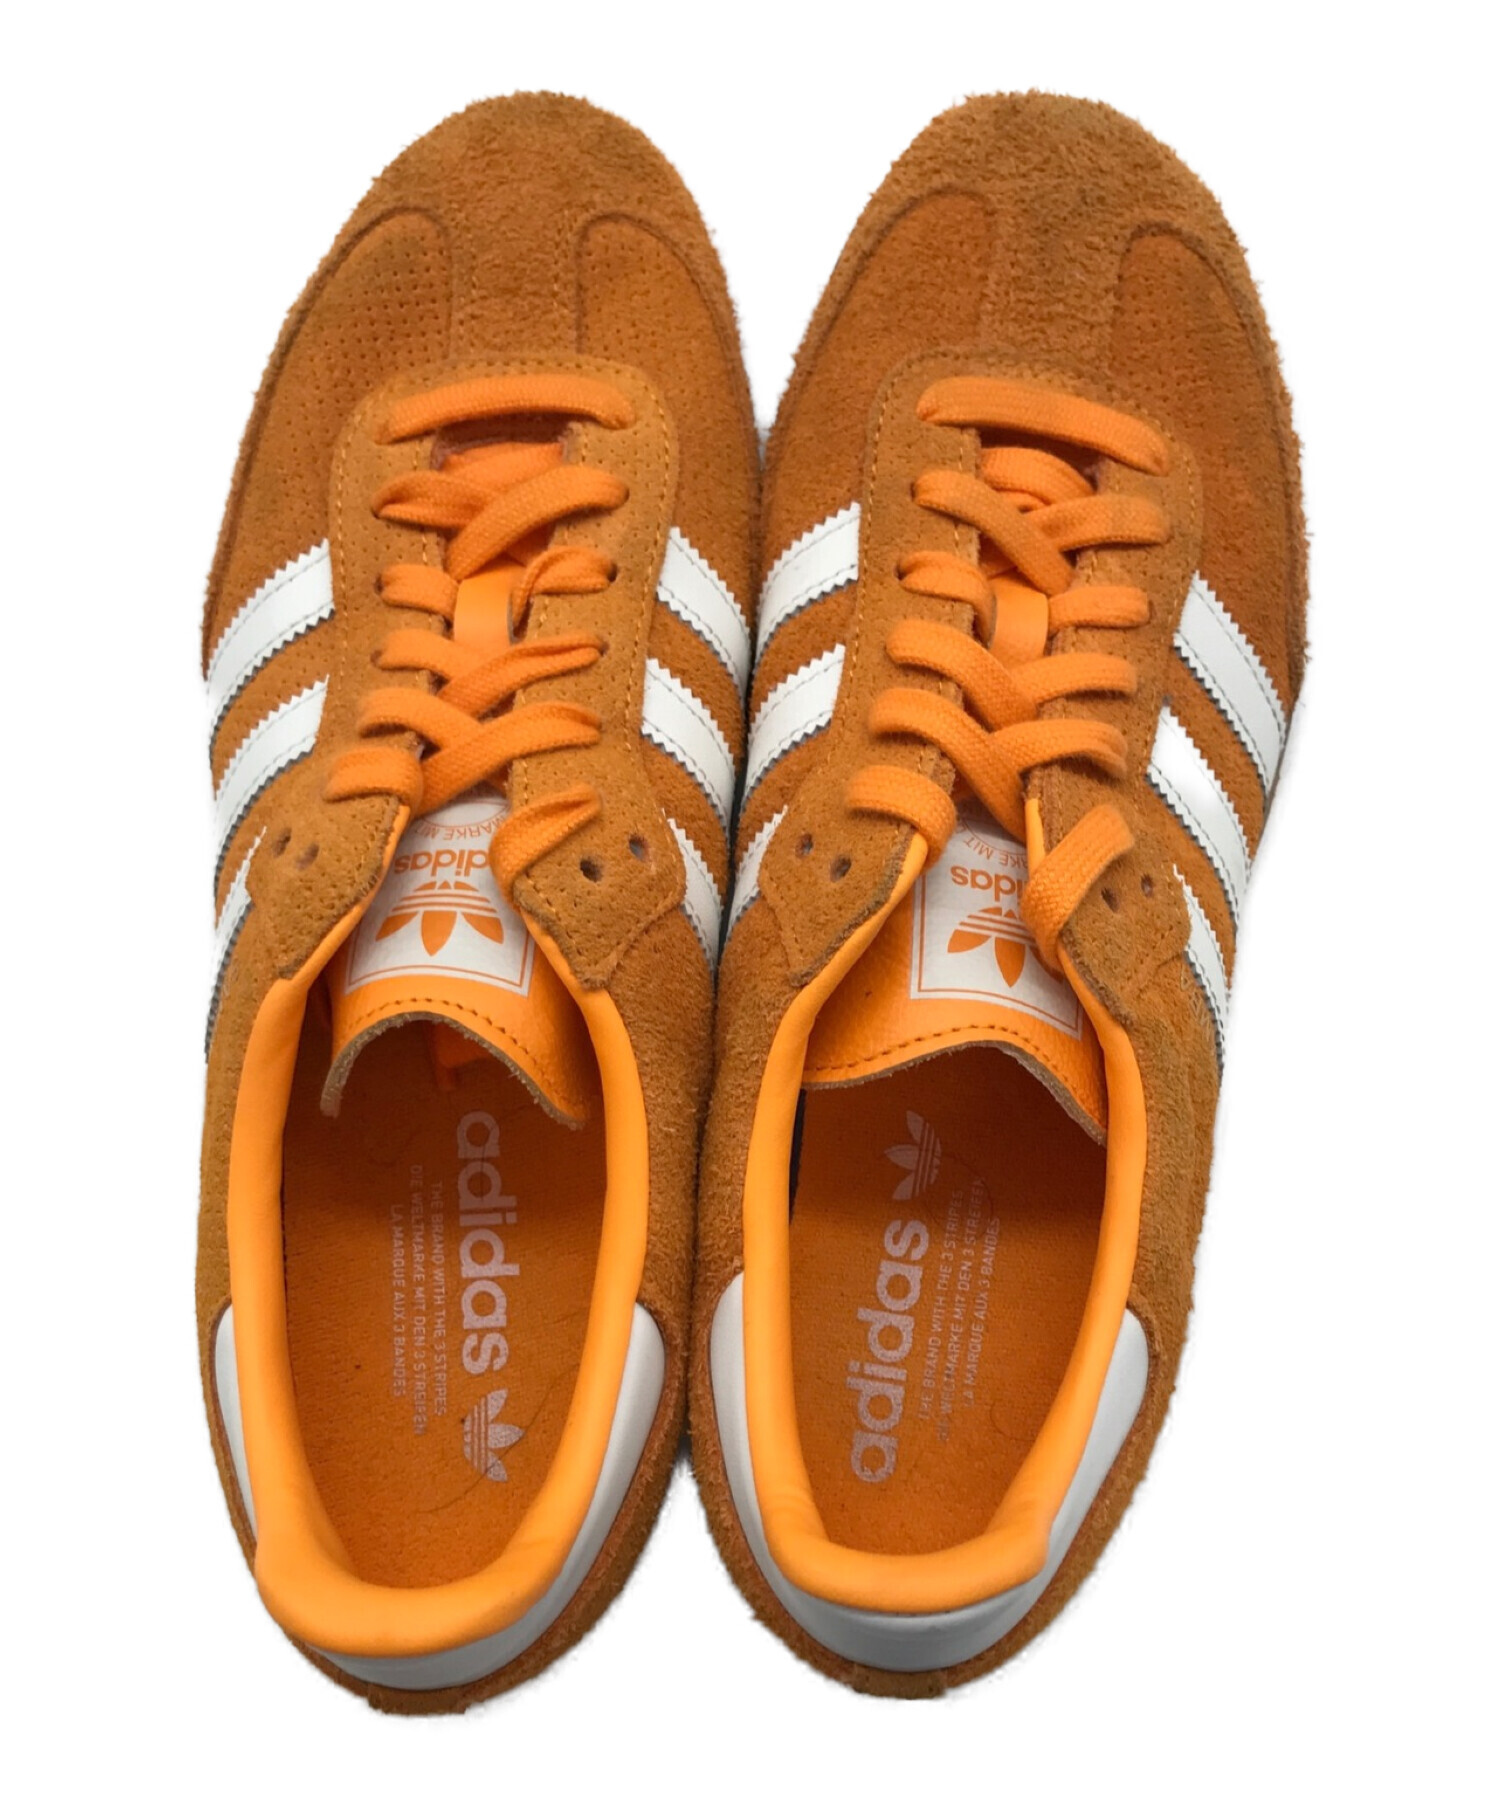 adidas (アディダス) SAMBA OG オレンジ サイズ:26.5cm